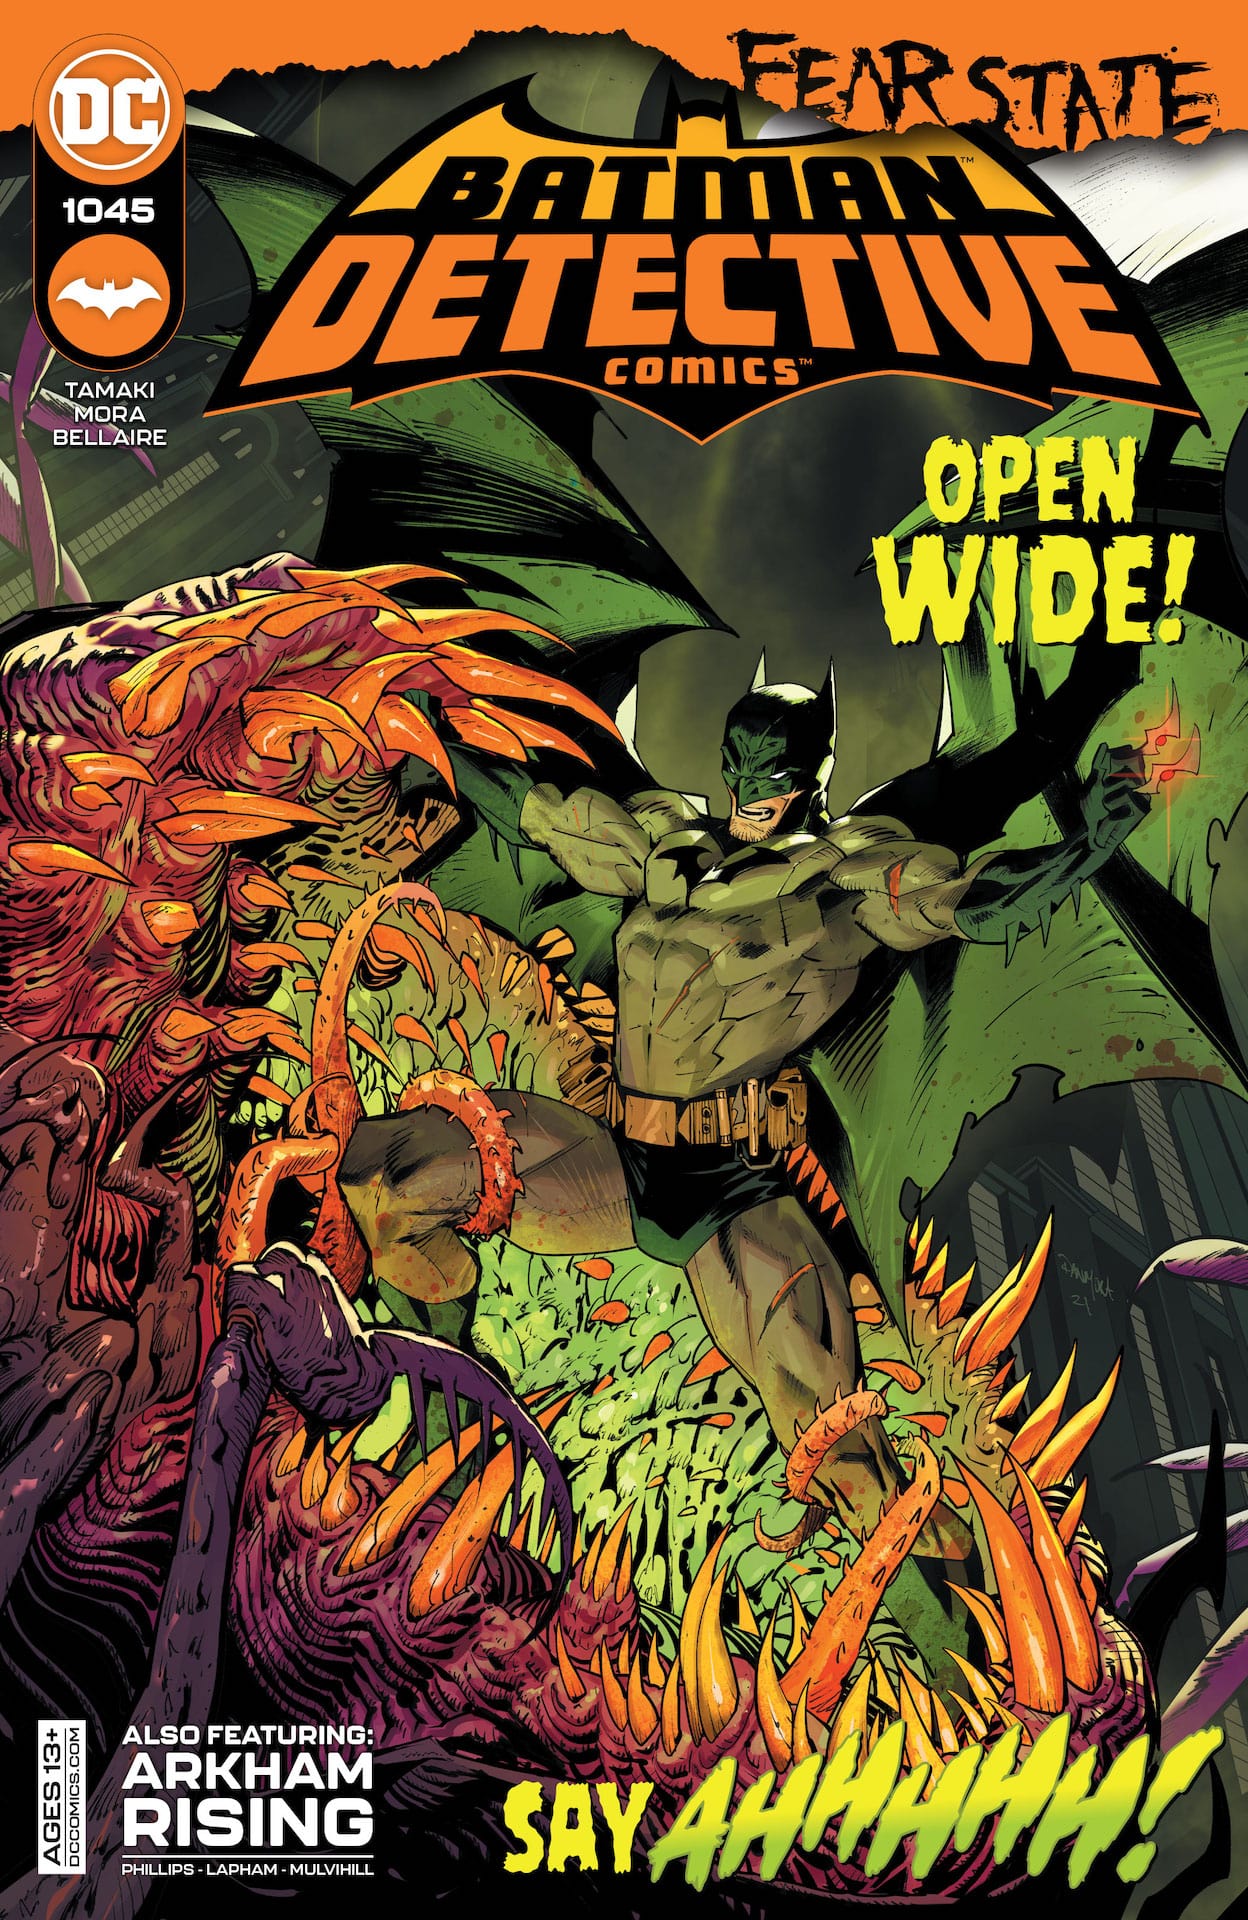 DC Preview: Detective Comics #1045